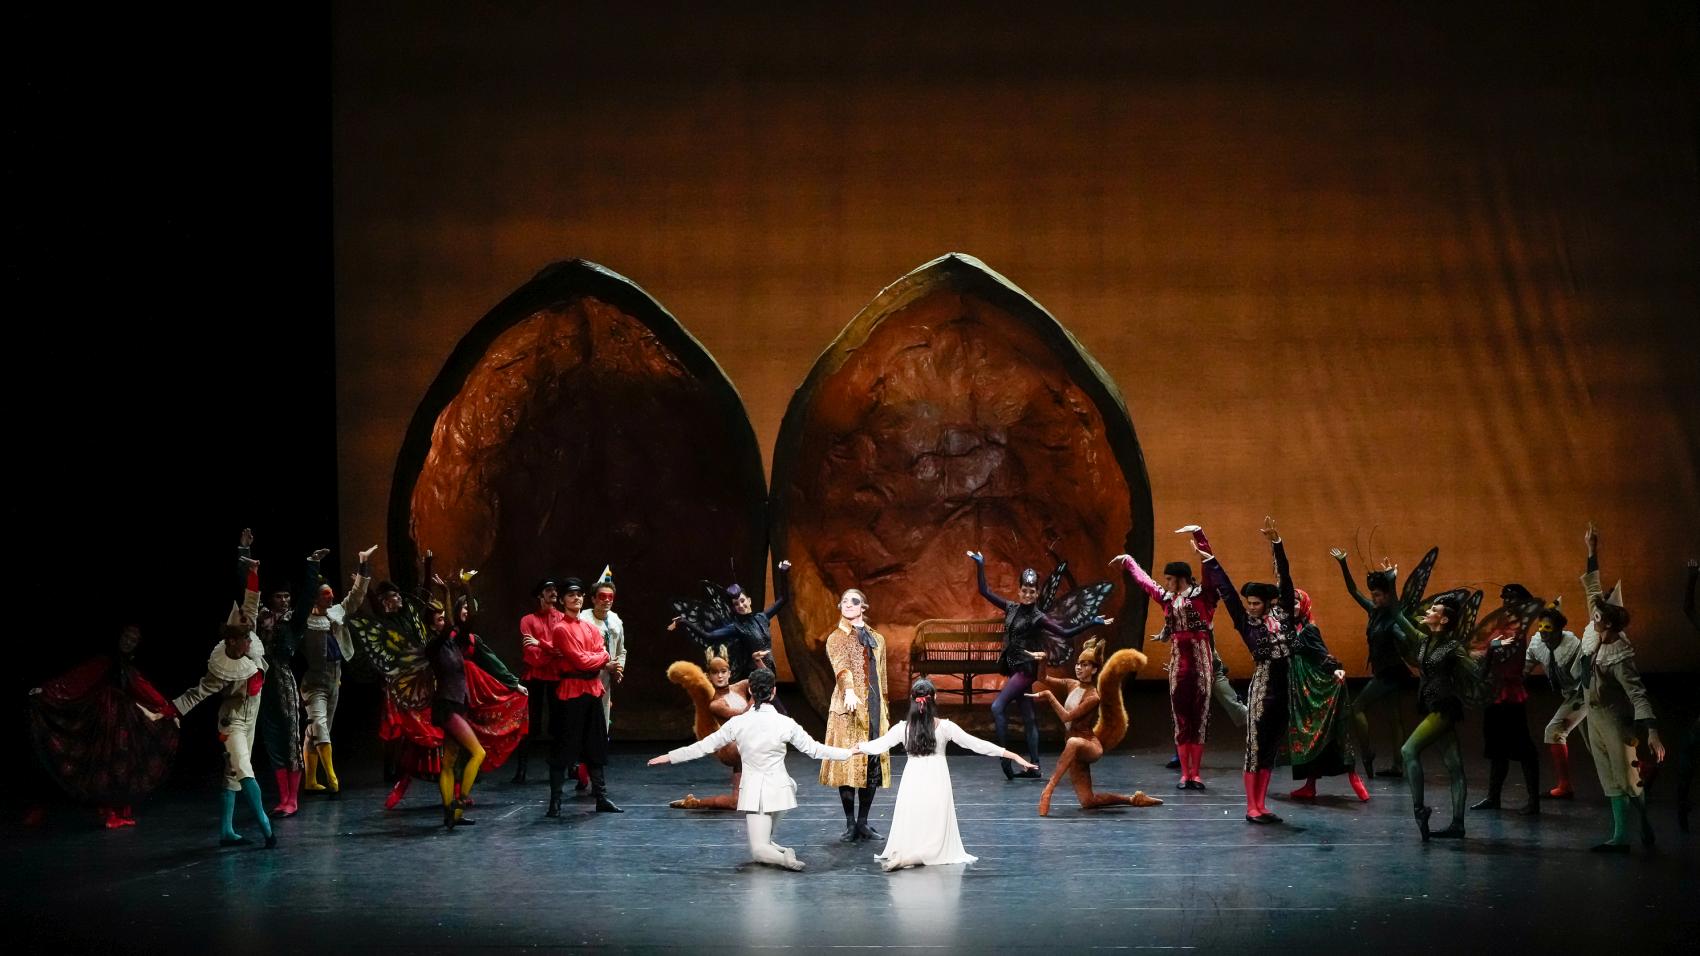 14. A.Su (Clara), A.Soares da Silva (Nutcracker Prince), M.Semenzato (Drosselmeier), and ensemble; “The Nutcracker” by E.Clug, Stuttgart Ballet 2023 © R.Novitzky/Stuttgart Ballet 